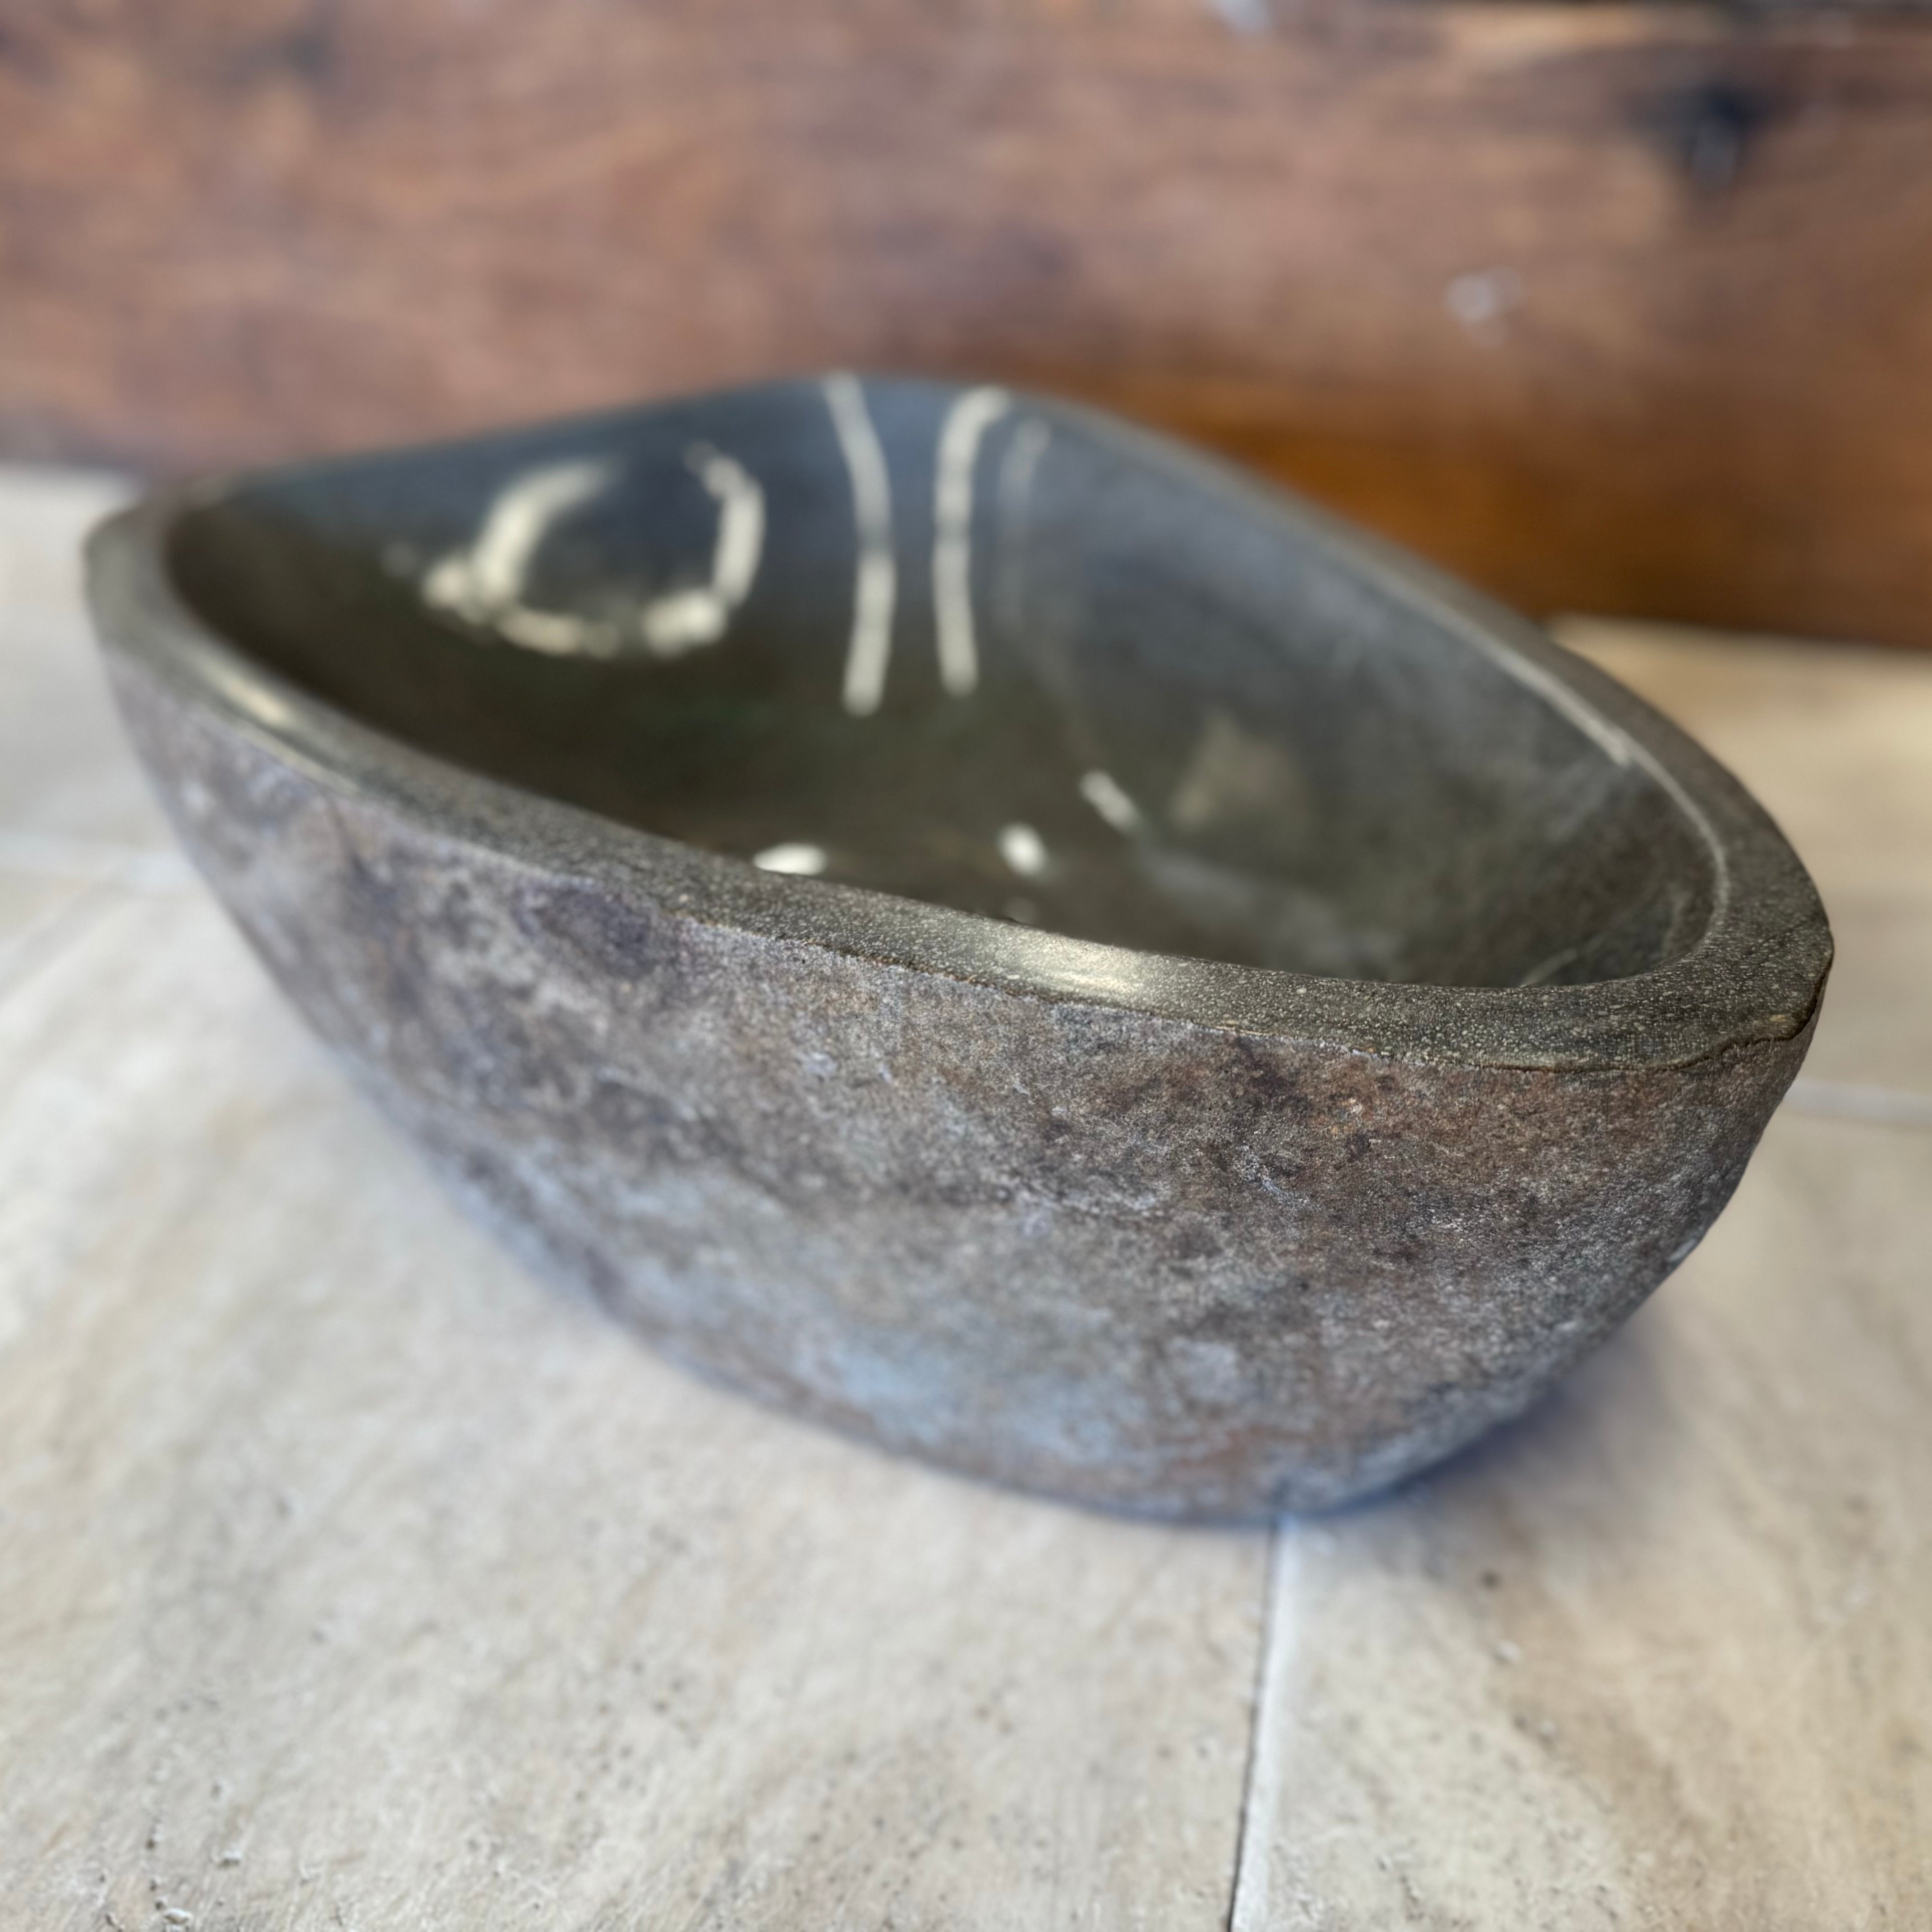 Handmade Natural Oval River Stone Bathroom Basin - RM2306006